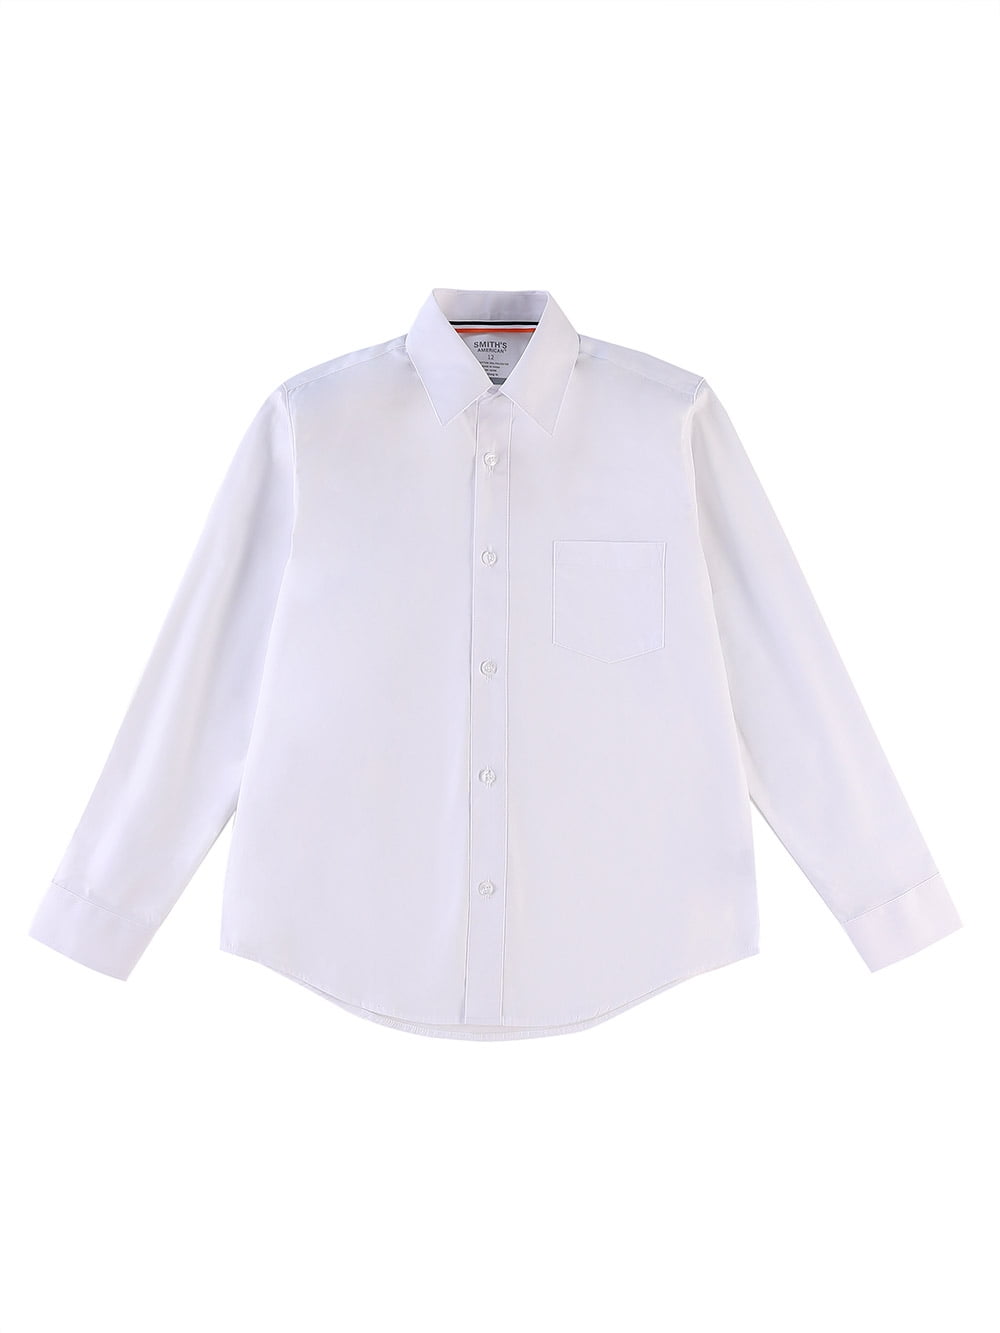 Smith's American Boys' L/S Button-Up Shirt - white, 16 husky (Big Boys ...